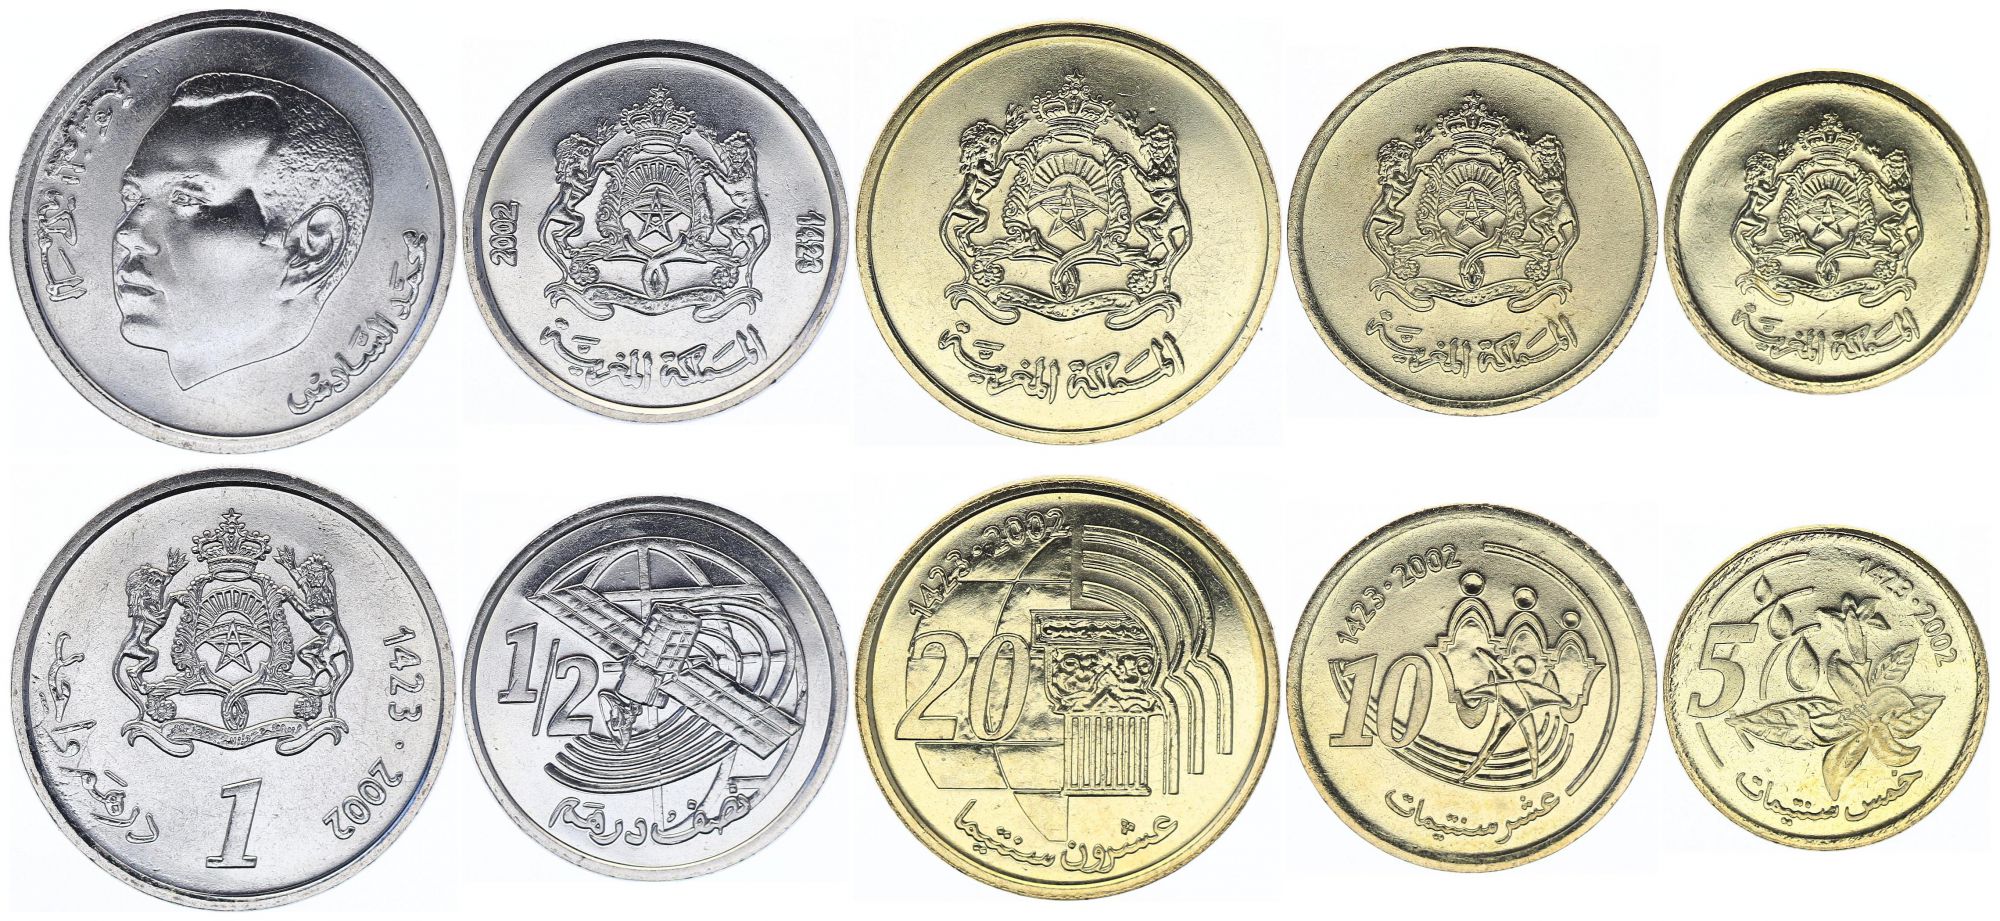 30000 дирхам. Монета Марокко 2002. 5 Марокко 2002. 5 Дирхам Марокко. 10 Дирхам монета.